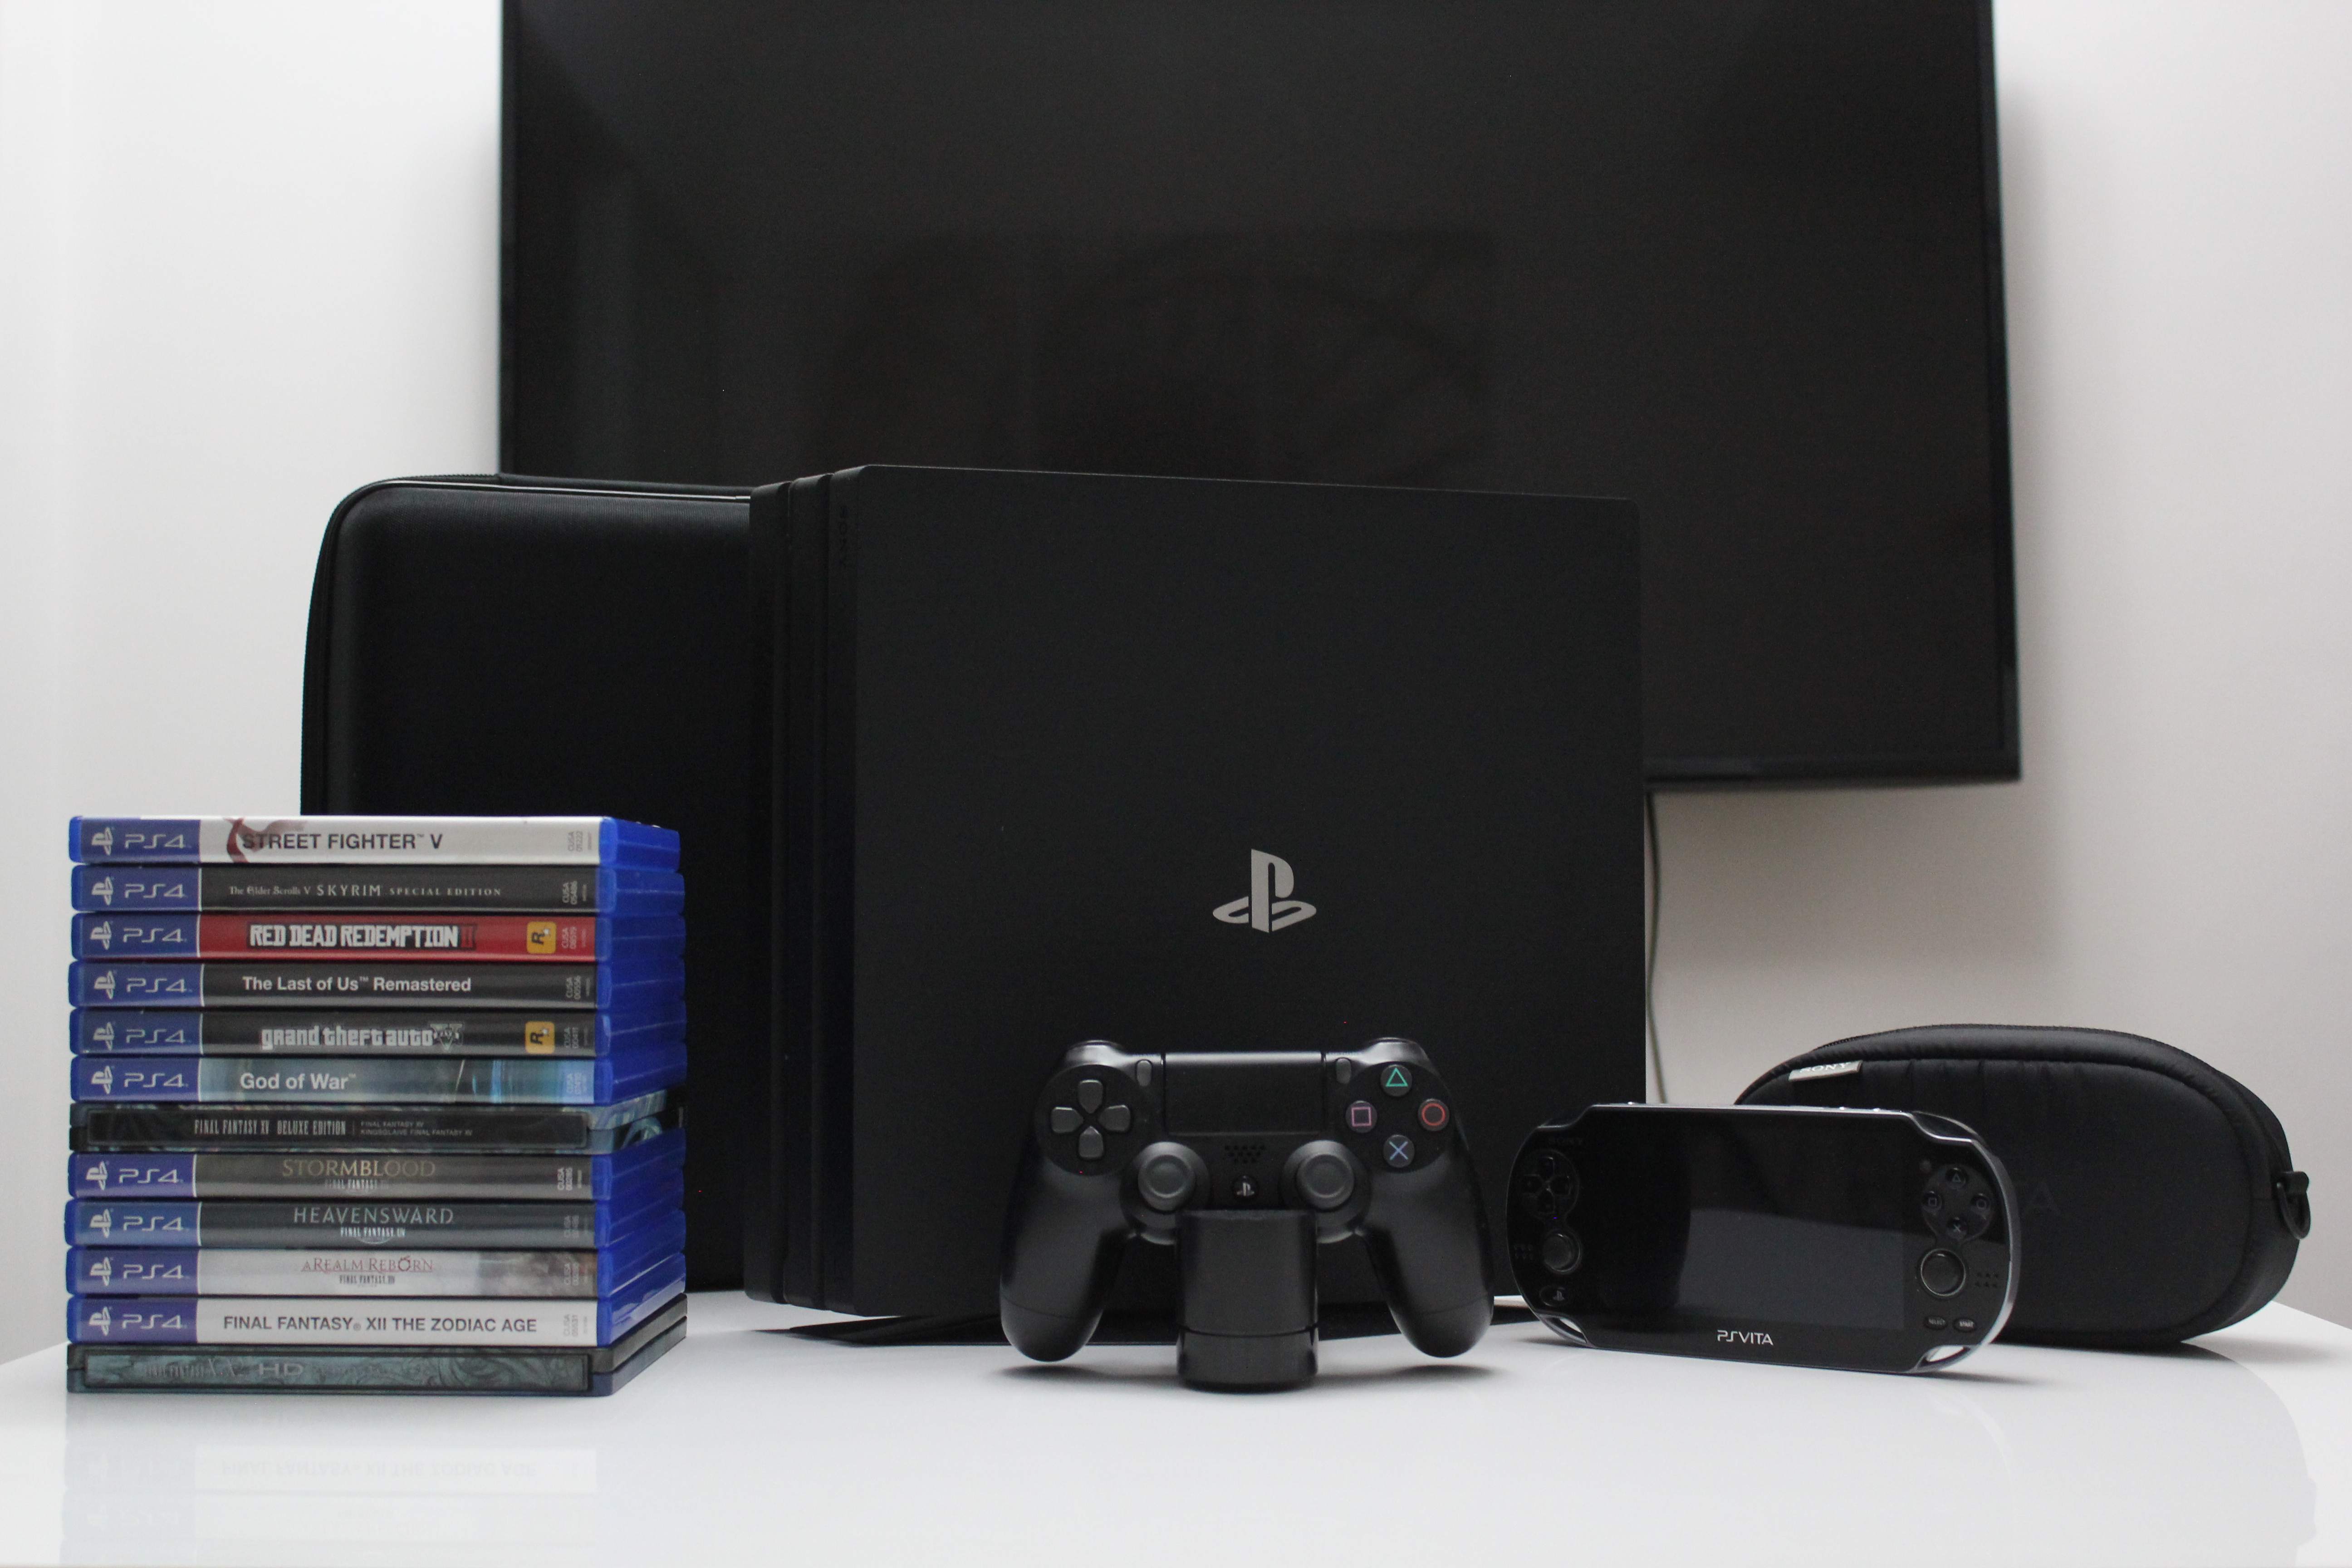 PS4 Pro 1 TB / PS Vita / PS4 games / accessories photo